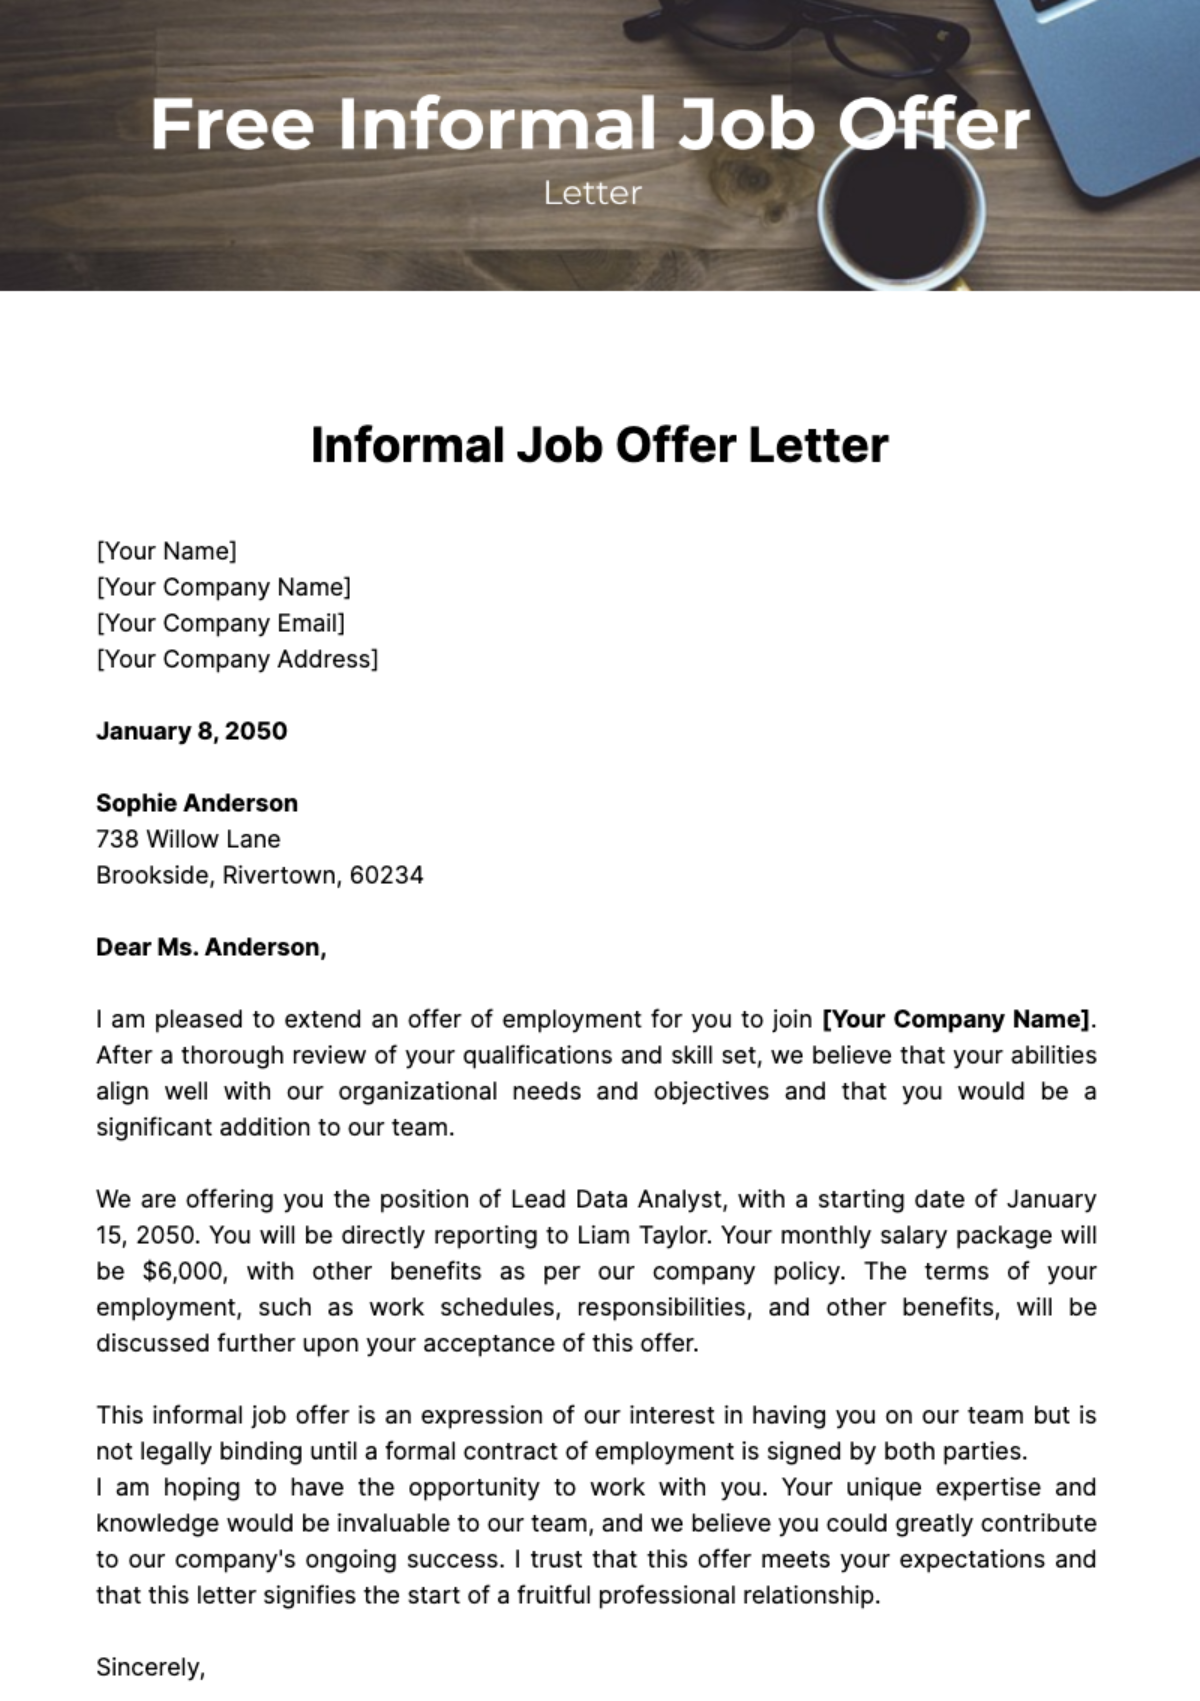 Free Informal Job Offer Letter Template